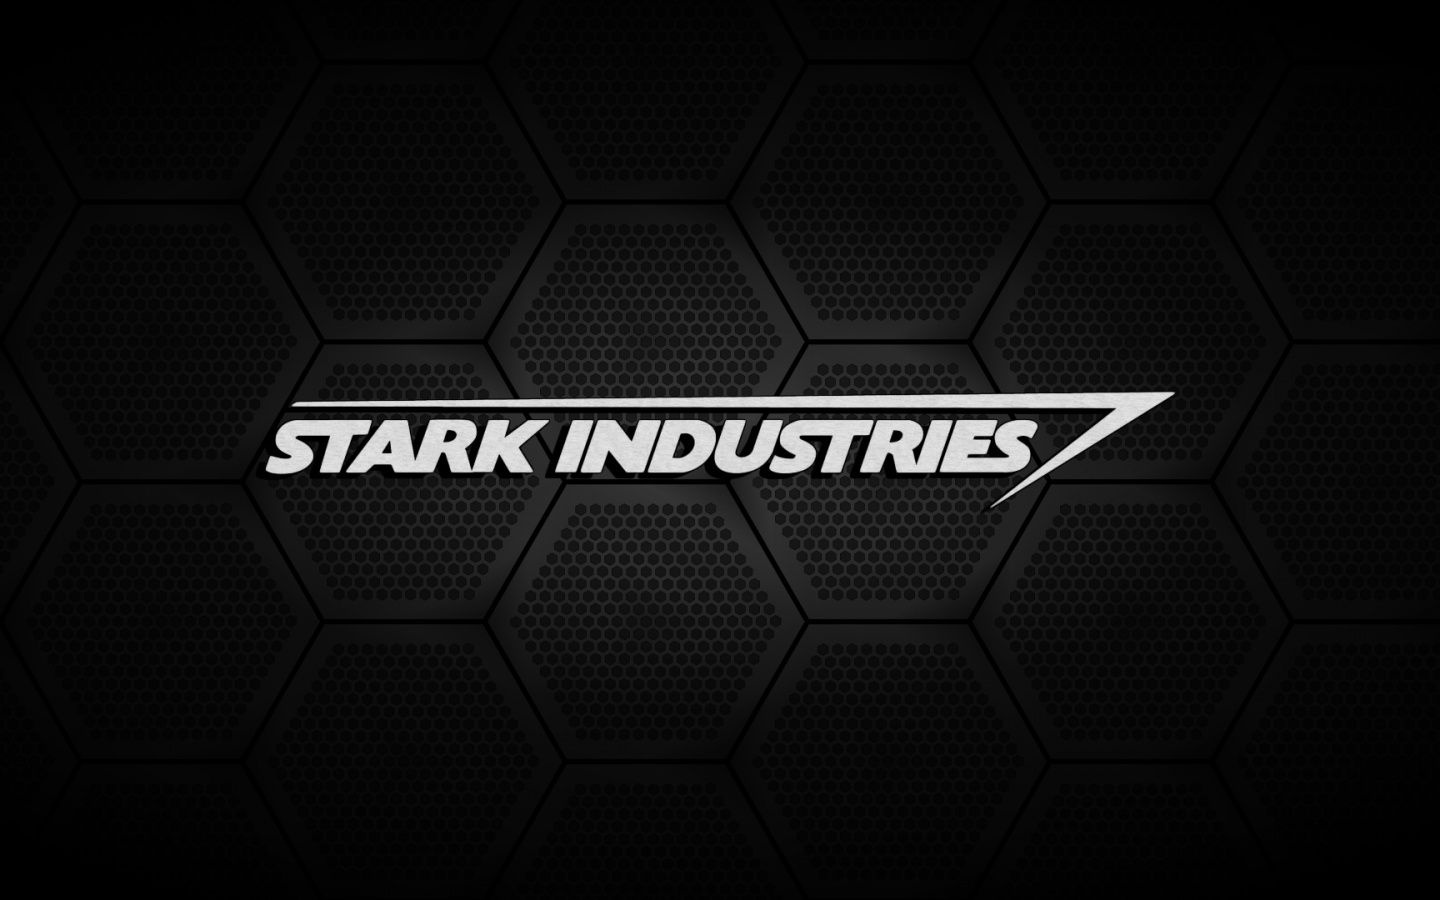 Stark Industries Wallpaper. Stark Industries Wallpaper, Tony Stark Wallpaper and Bleach Stark Wallpaper